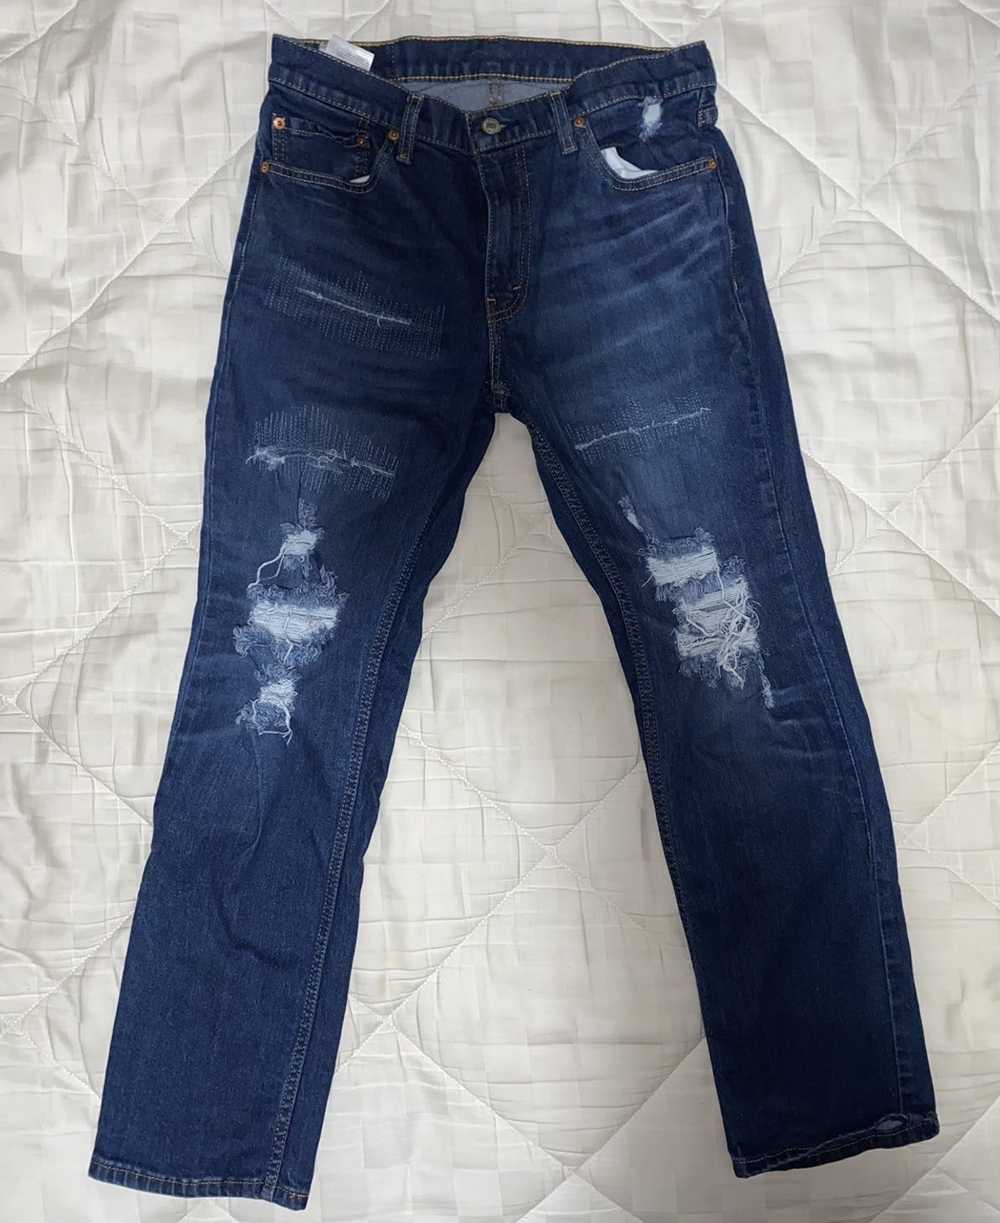 Levi's Levi’s 511 Distressed Slim Jeans - image 1